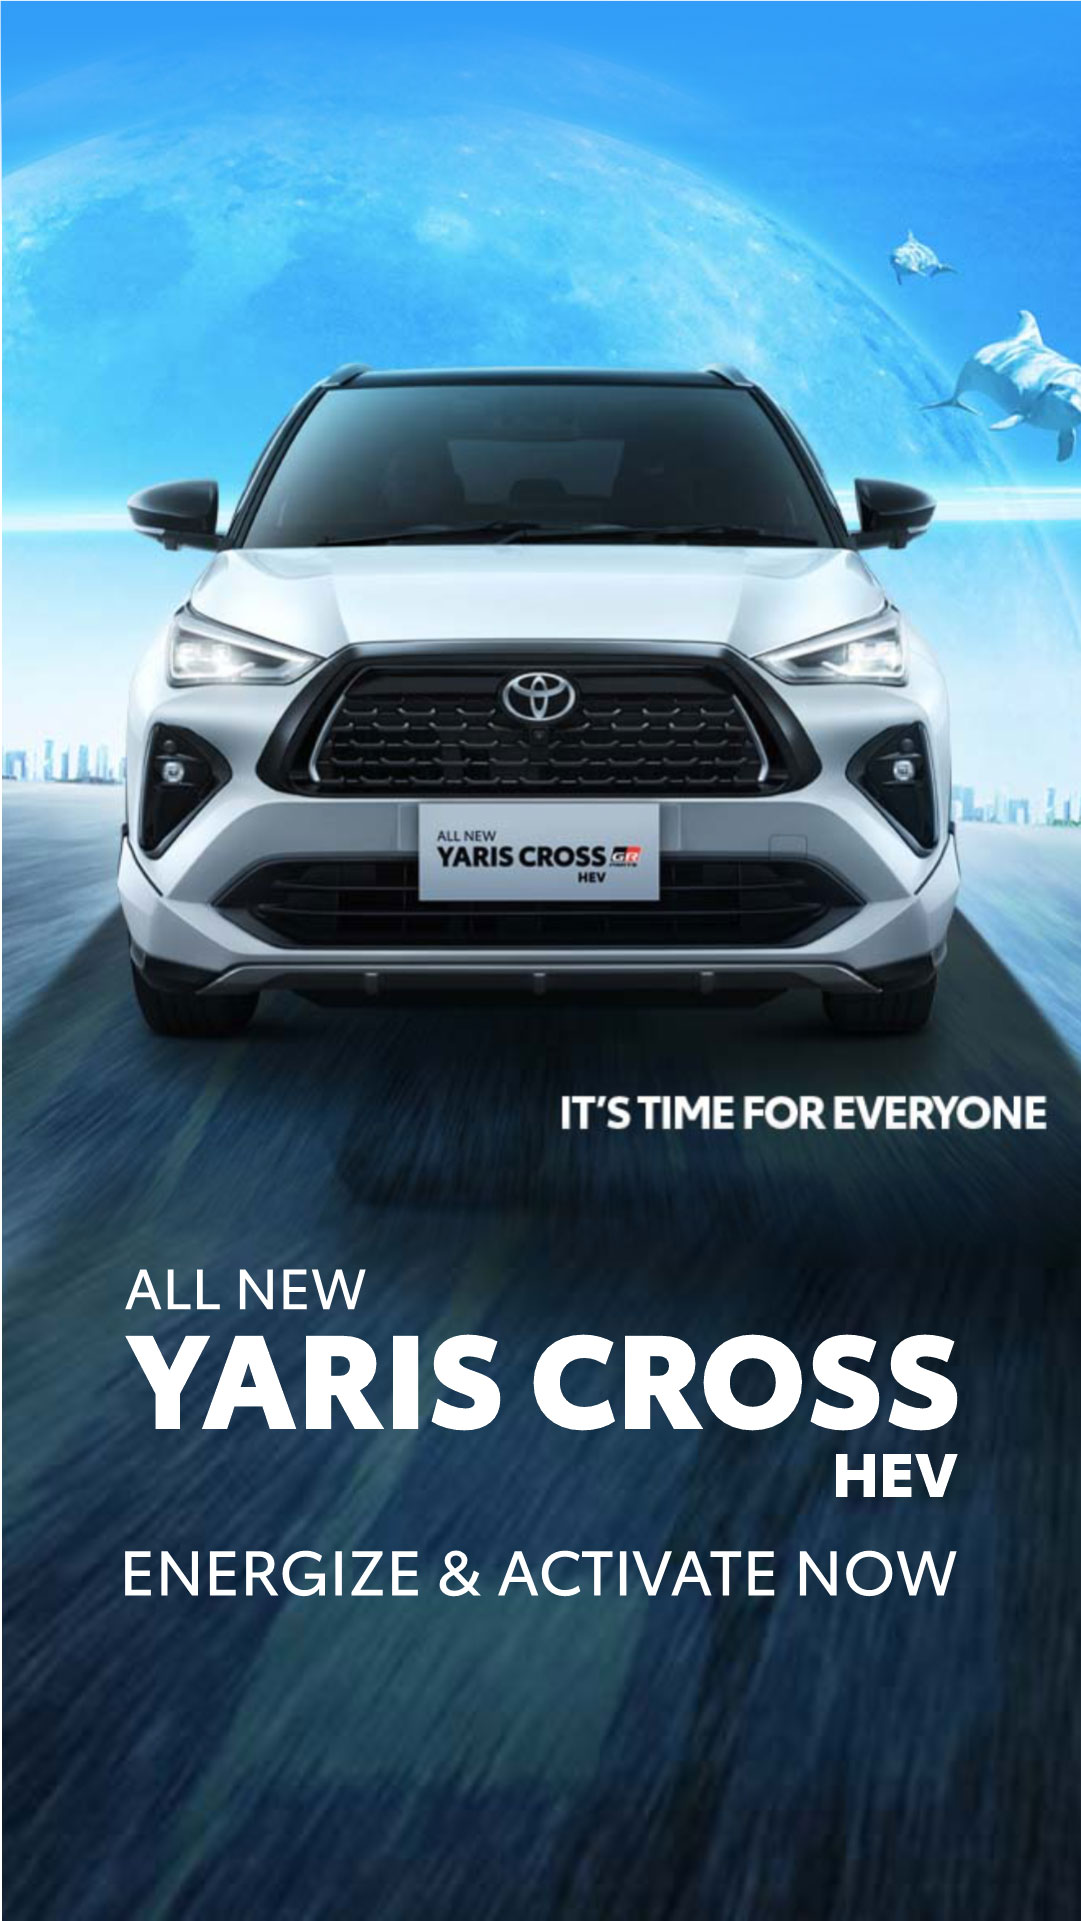 All New Yaris Cross HEV